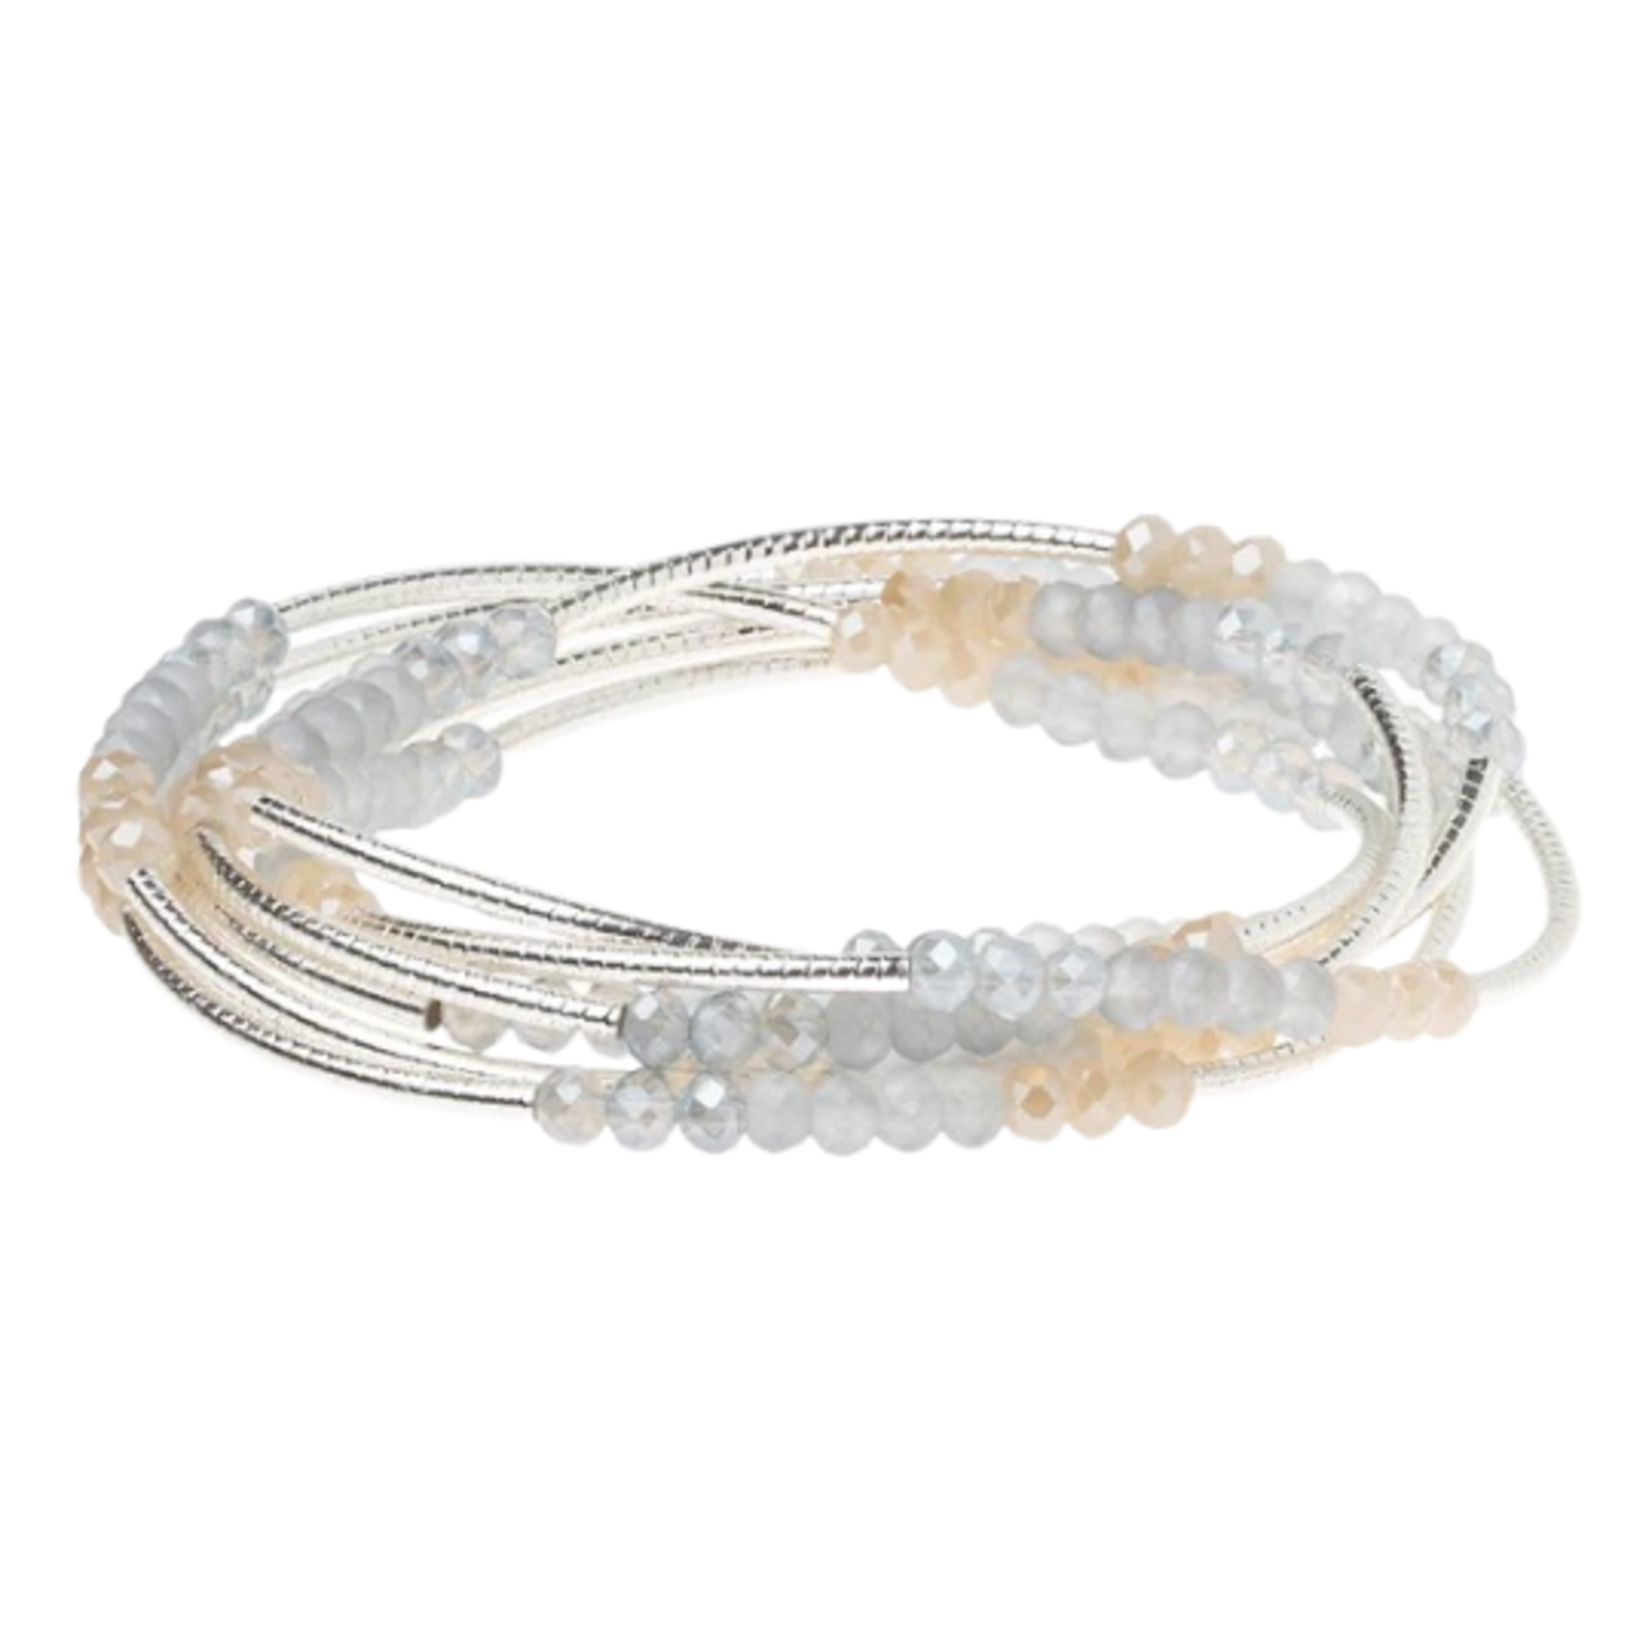 Mist - Wrap Bracelet/Necklace